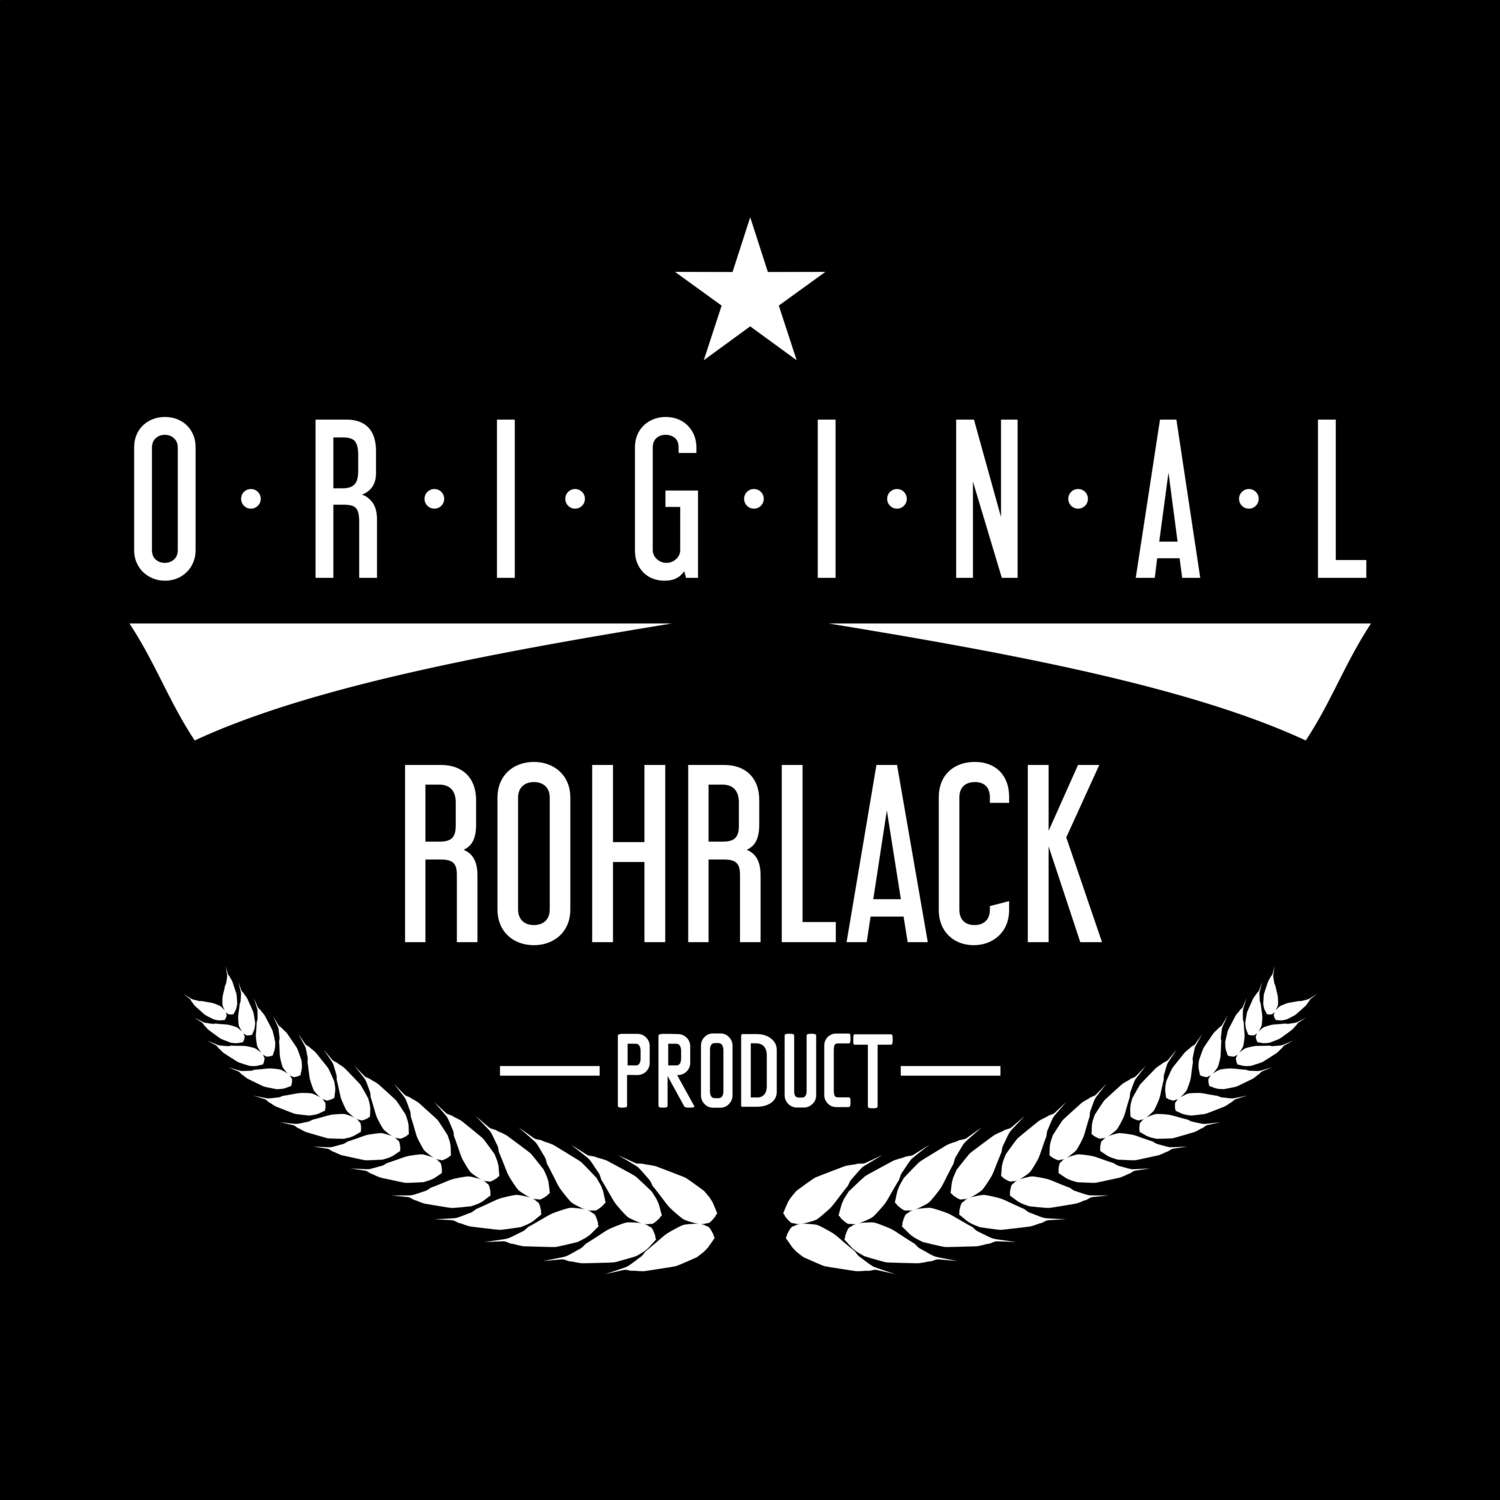 Rohrlack T-Shirt »Original Product«